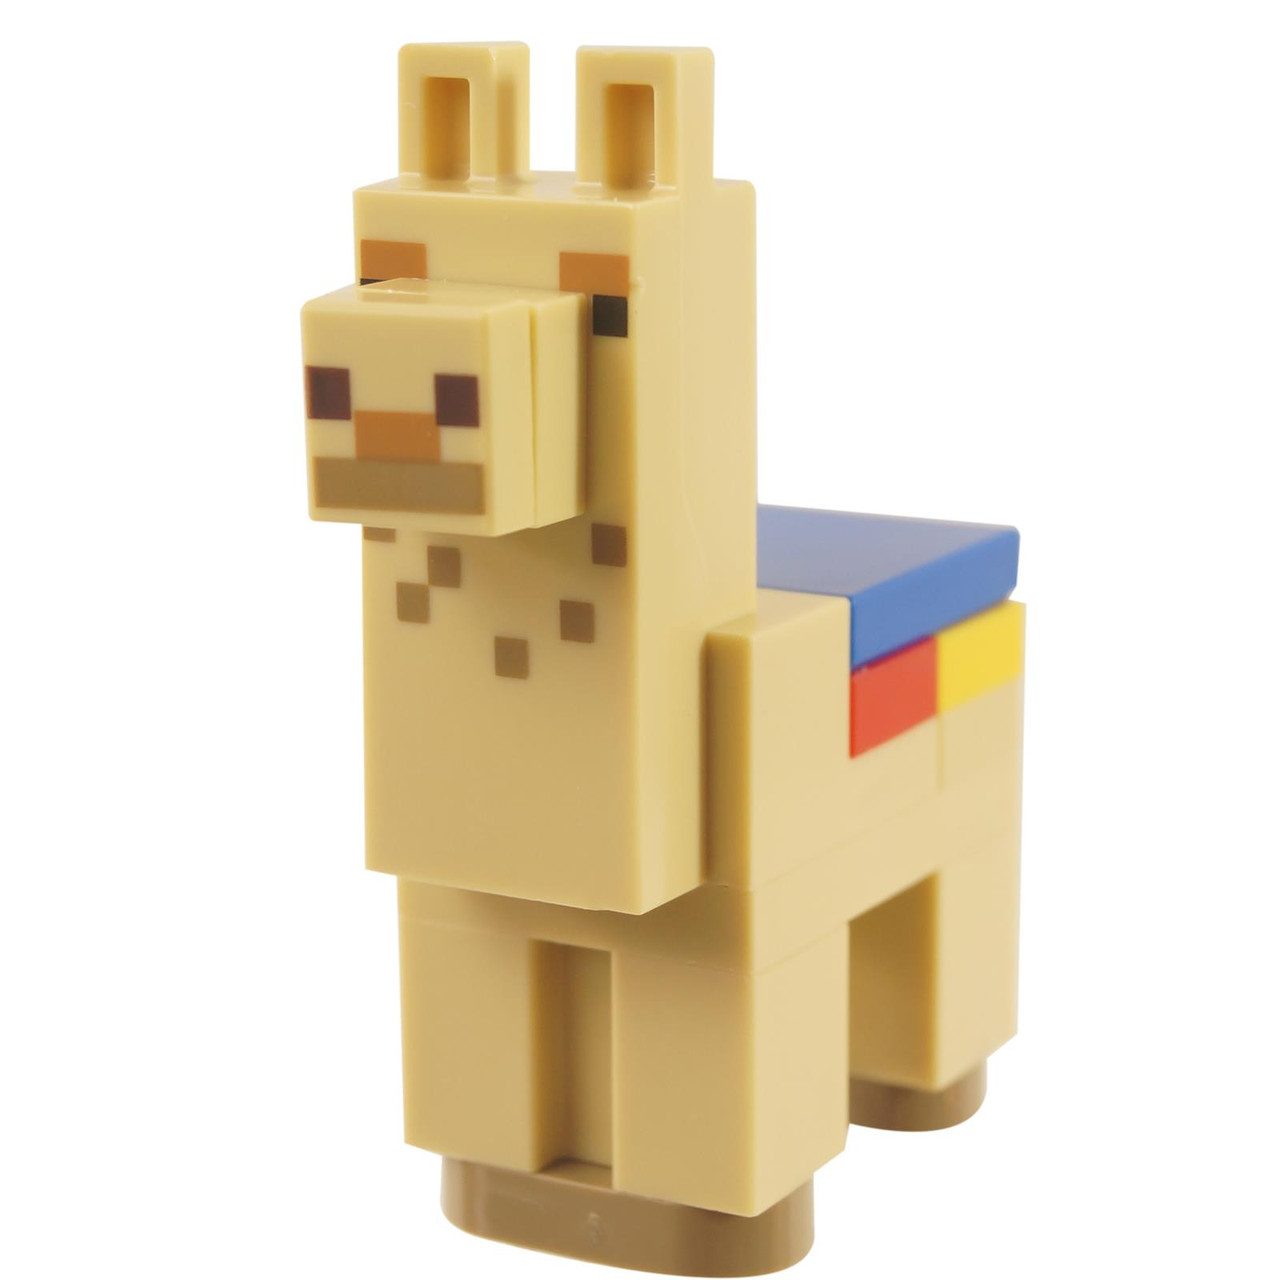 LEGO® Alpaca Minifigure: Cutest Companion for Your Adventures!